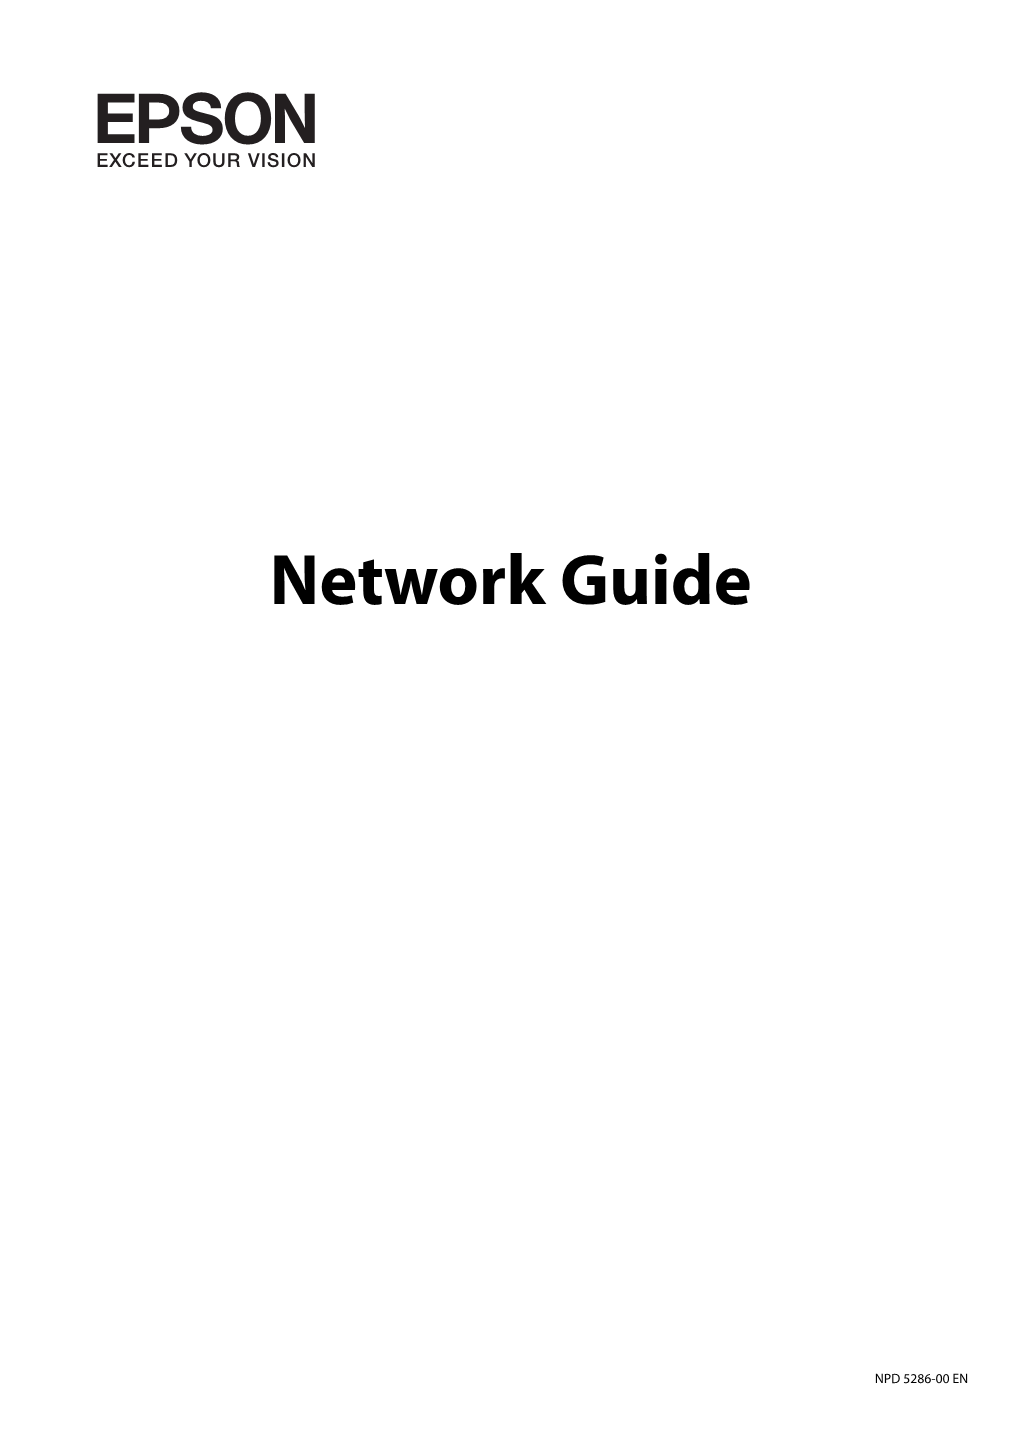 Printing a Network Status Sheet